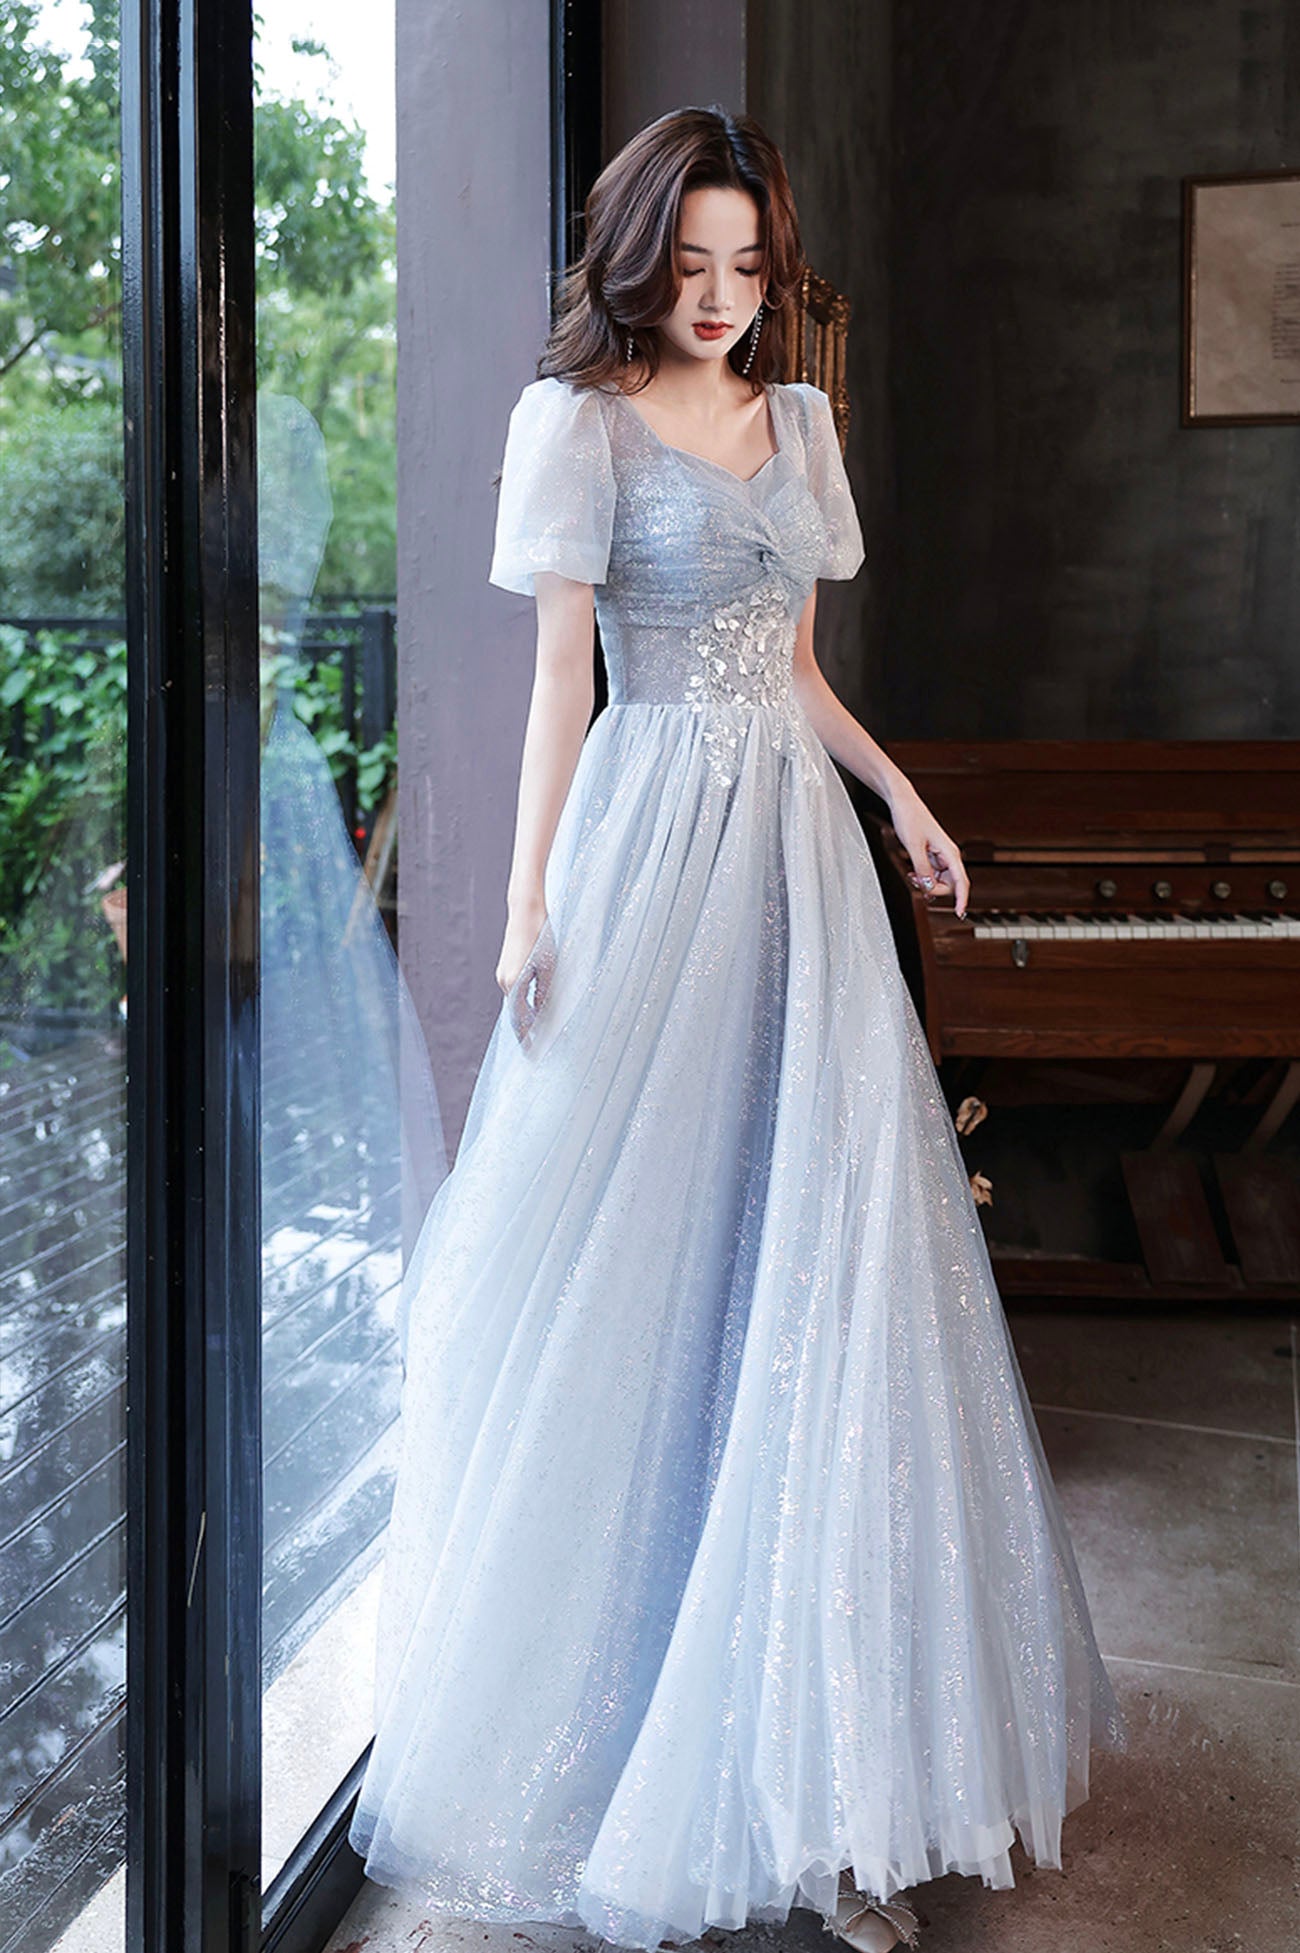 Blue Shiny Tulle Long A-Line Prom Dress, Blue Short Sleeve Evening Dress